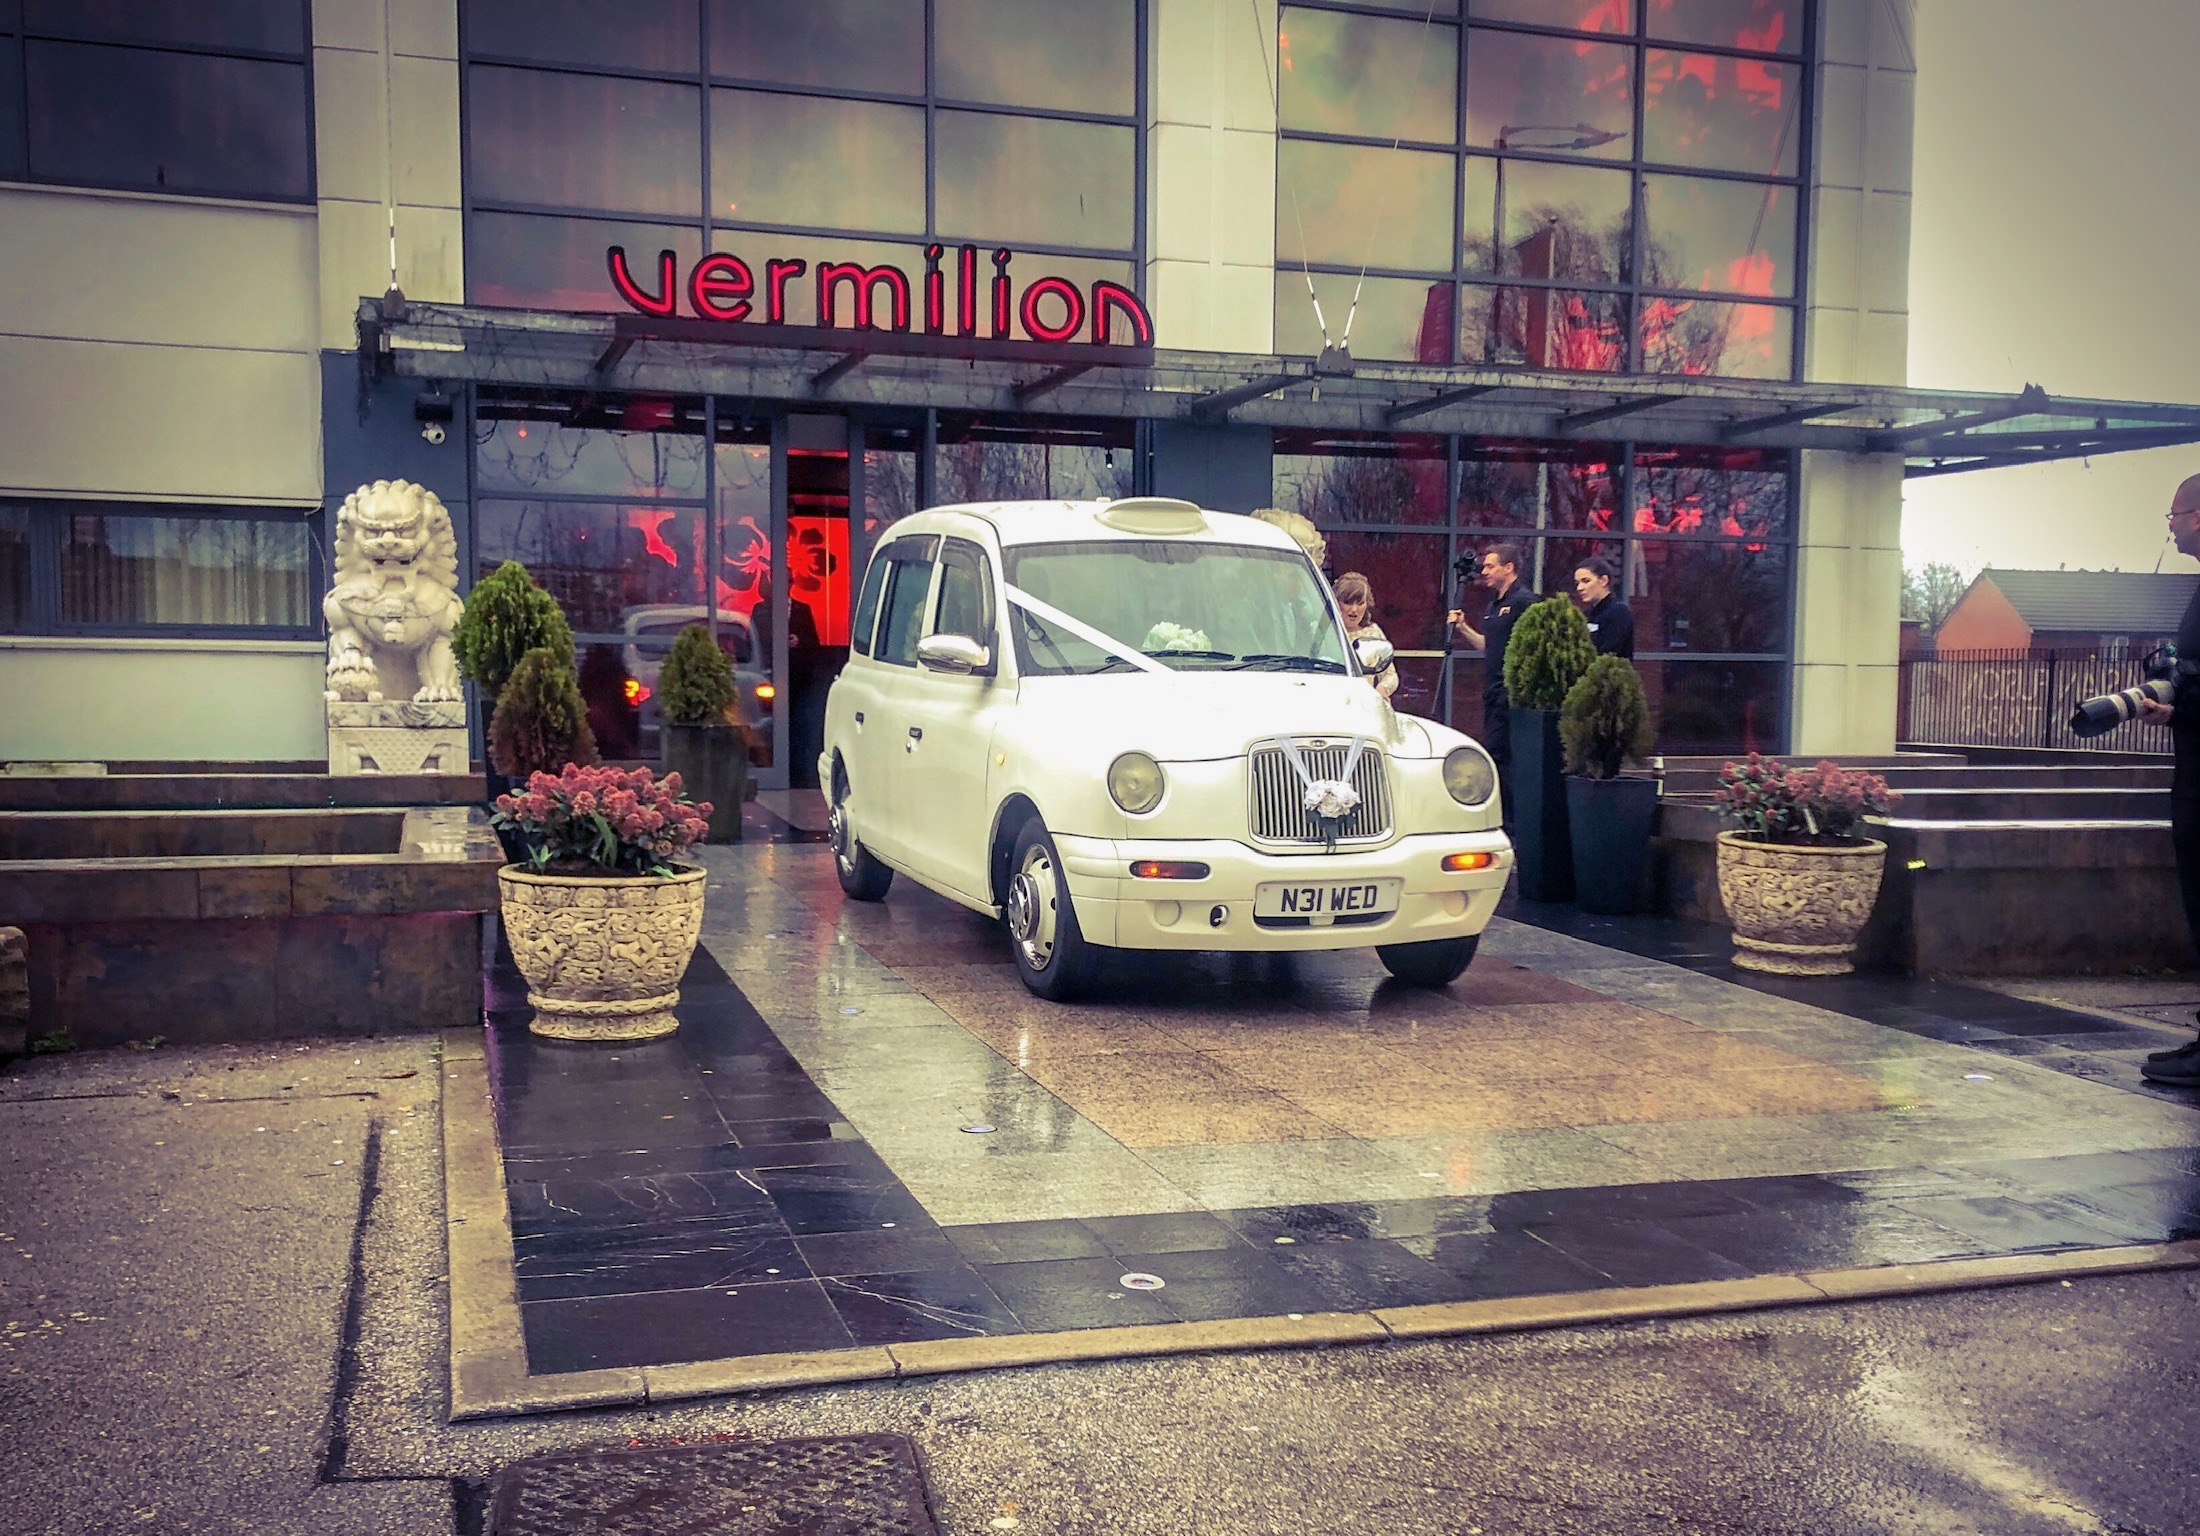 Vermillion wedding taxi cars